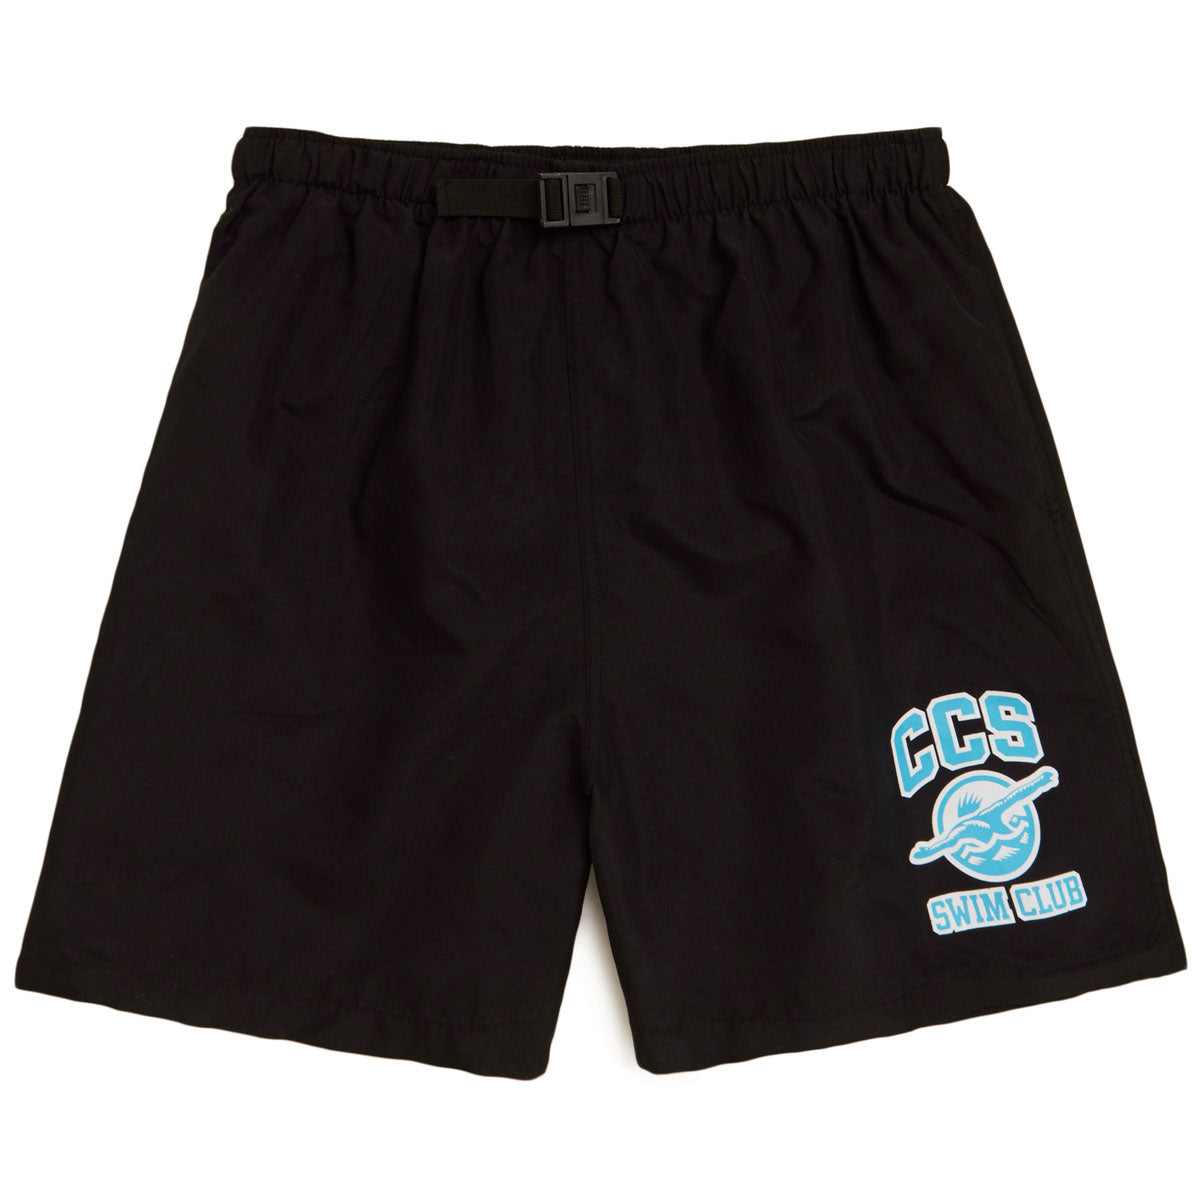 CCS Swim Club Hybrid Shorts - Black